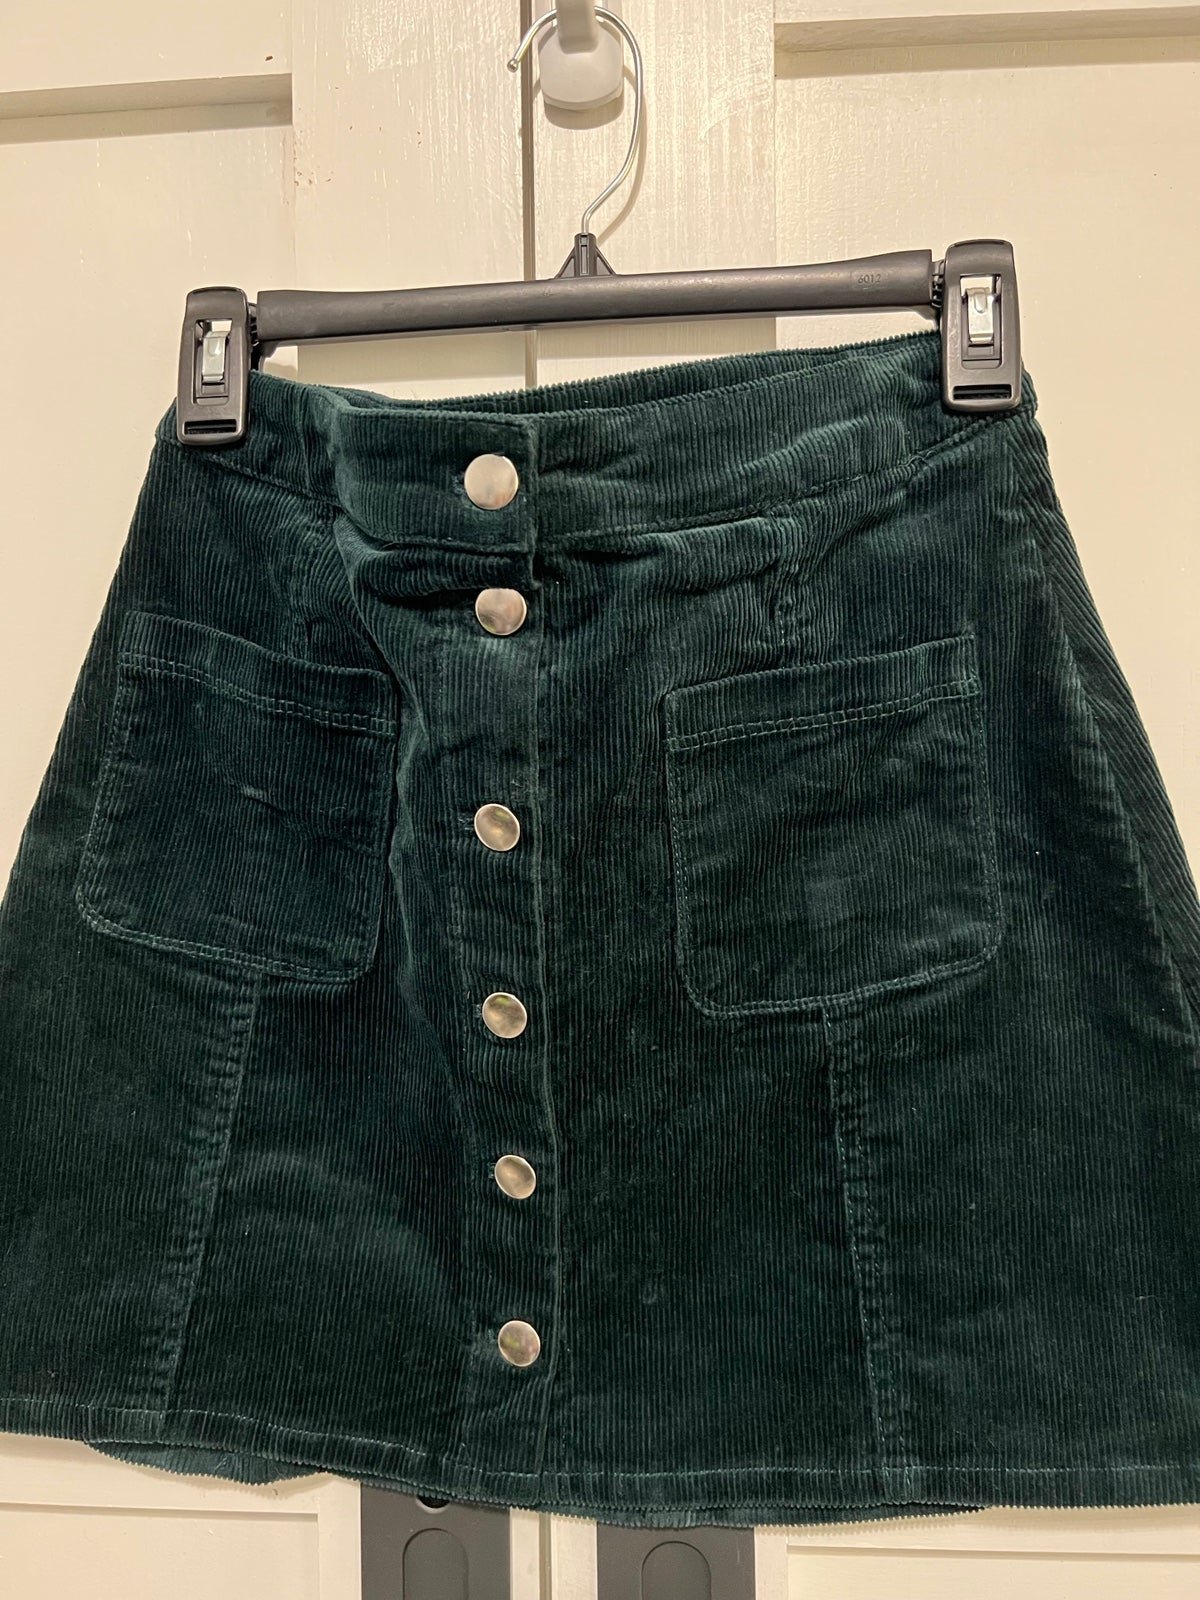 Discounted Green Corduroy Skirt GwvSGb6ui for sale